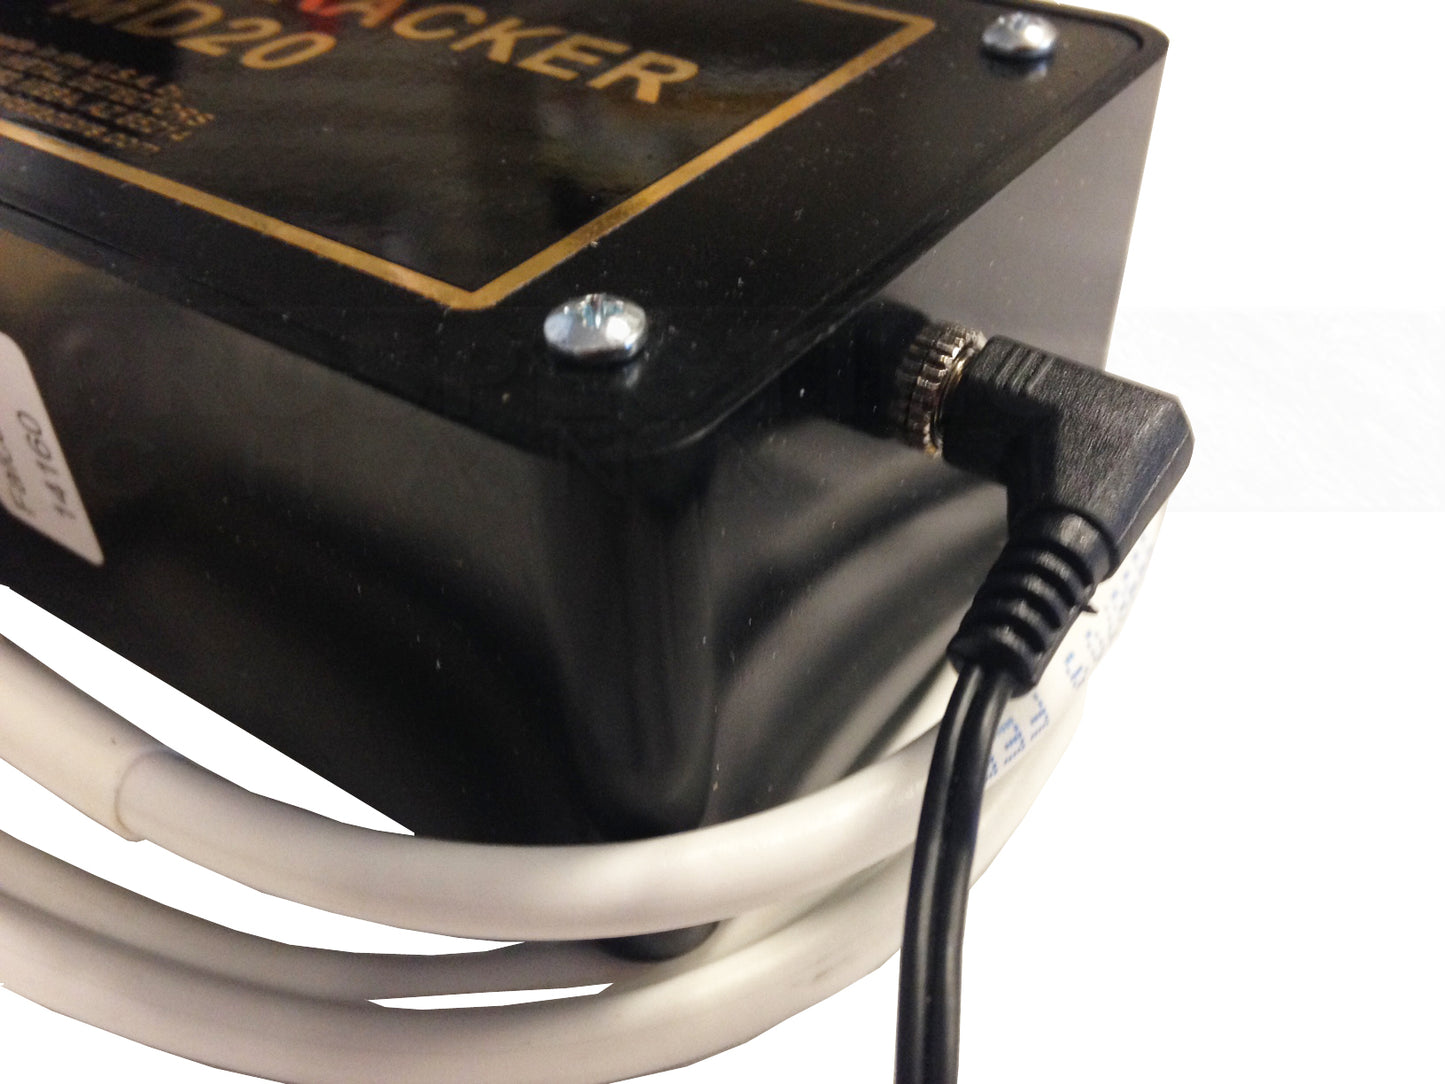 Falcon MD20 Gold Tracker Metal Detector Headphones